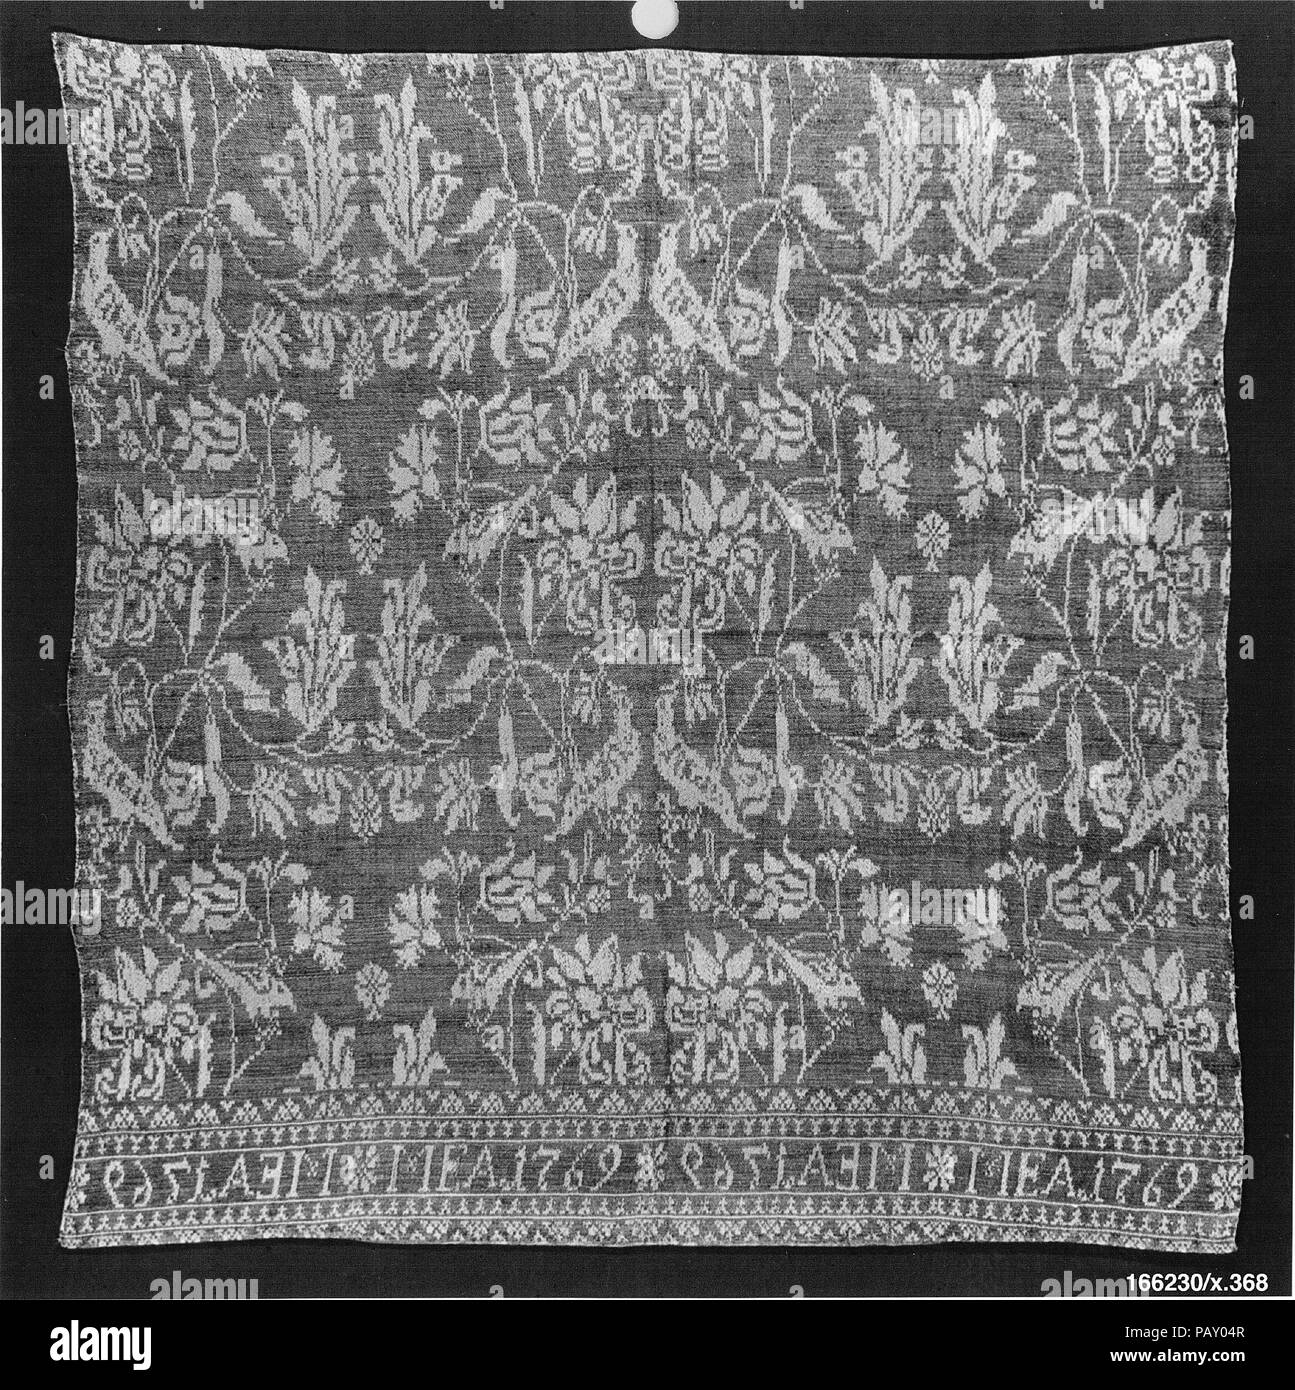 Stück. Kultur: Deutsch. Abmessungen: H 30 cm x W 31 cm (Breite) (77,5 x 78,7 cm). Datum: 1769. Museum: Metropolitan Museum of Art, New York, USA. Stockfoto